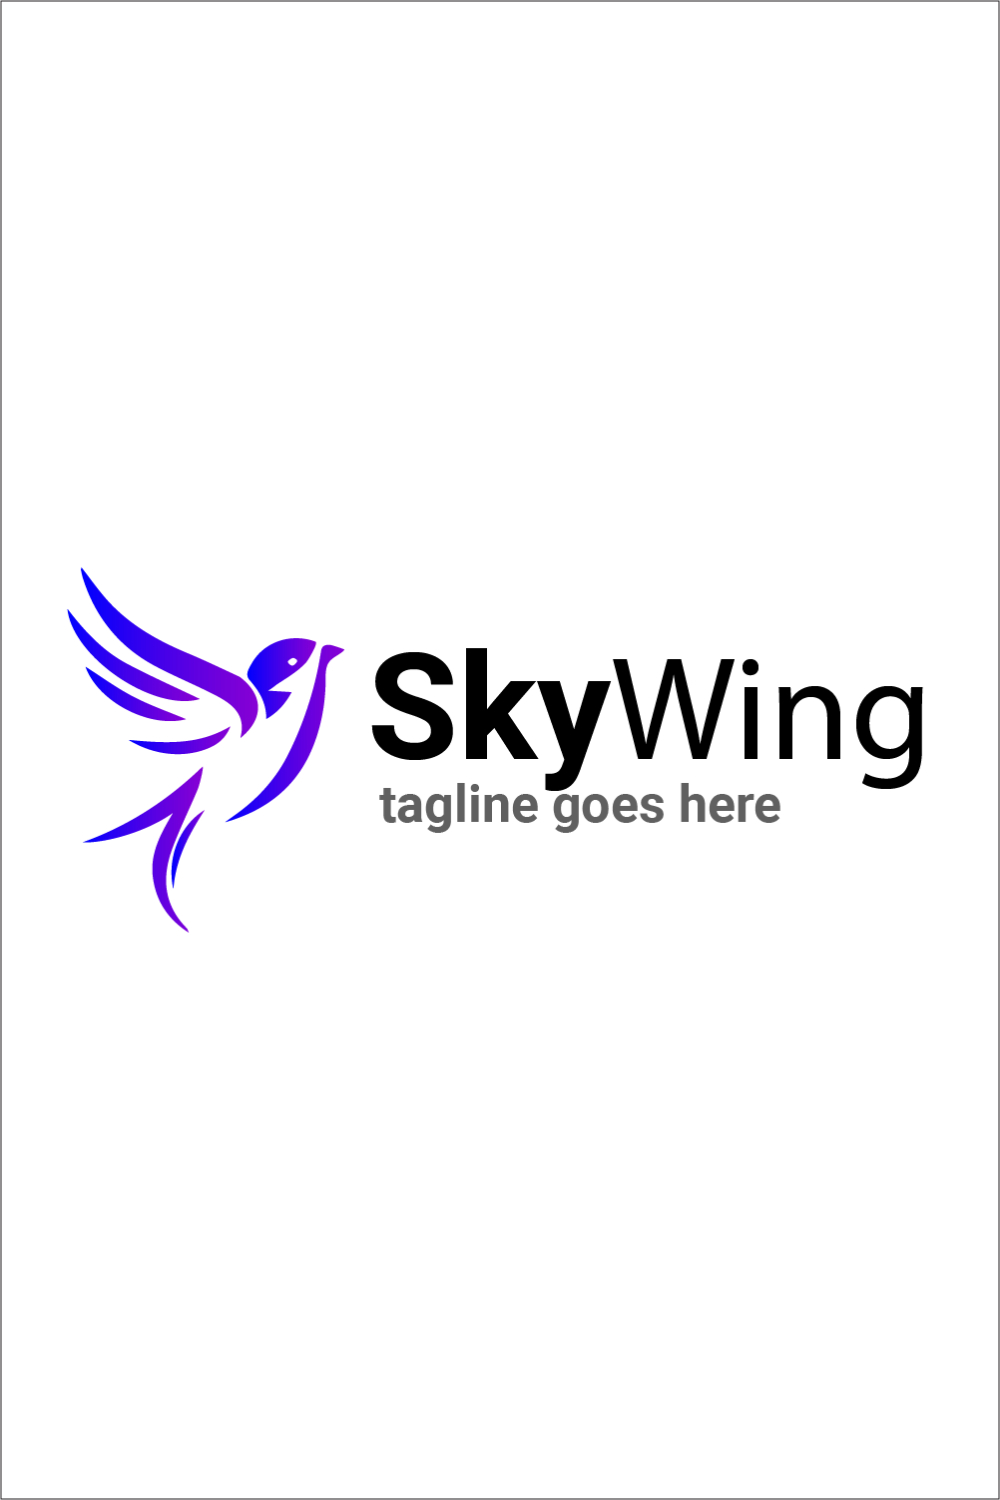 Sky wing logo , bird logo pinterest preview image.